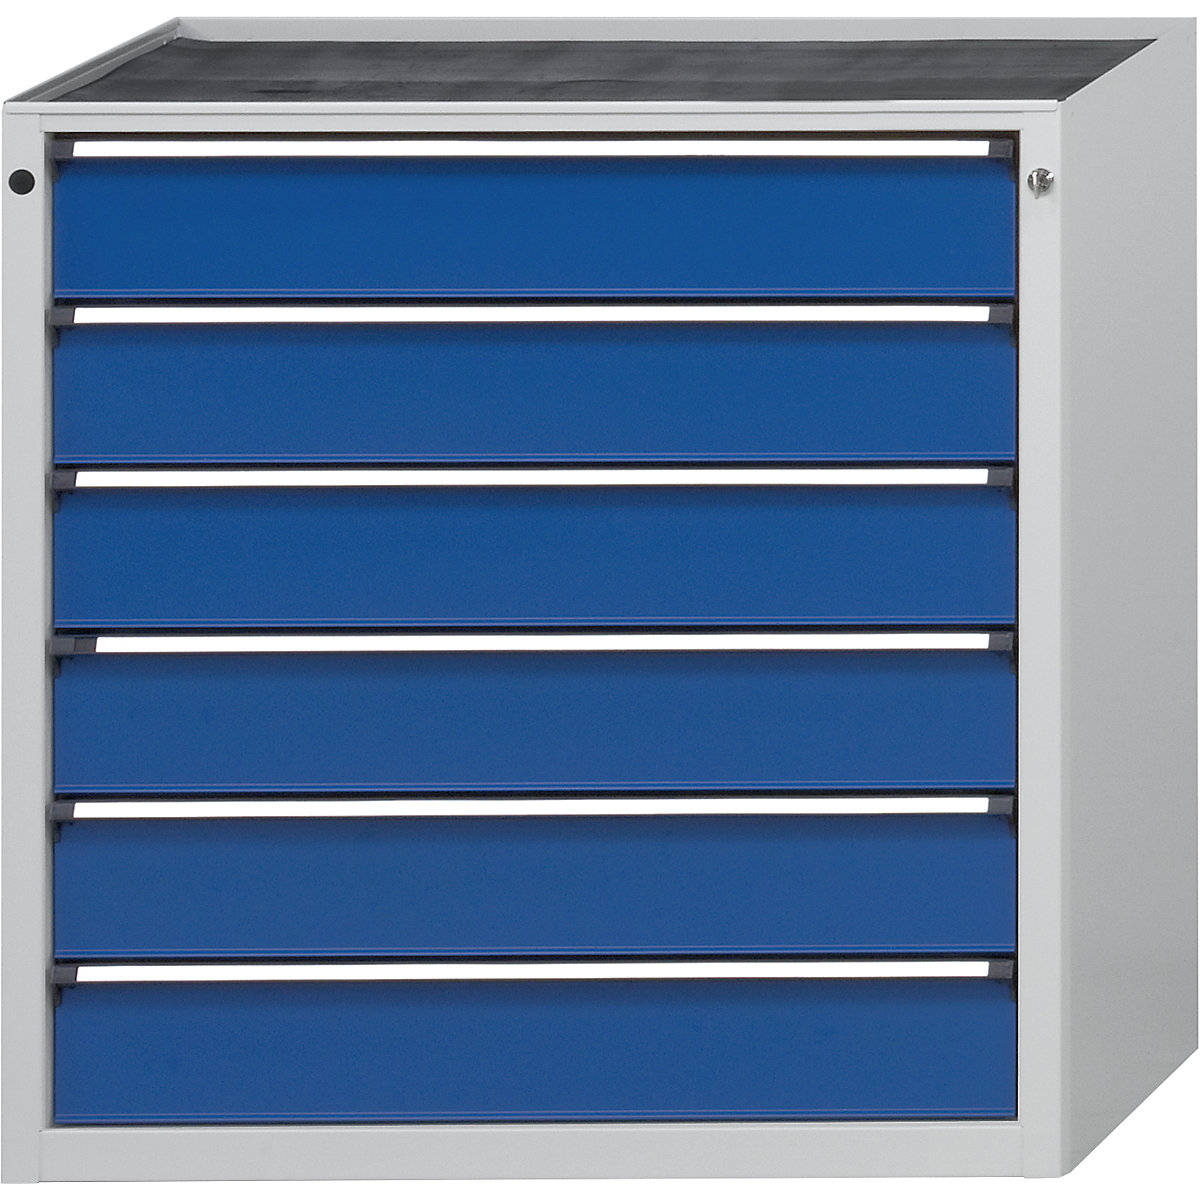 ANKE – Armoire à tiroirs, l x p 910 x 675 mm, 6 tiroirs, hauteur 980 mm, façade bleu gentiane